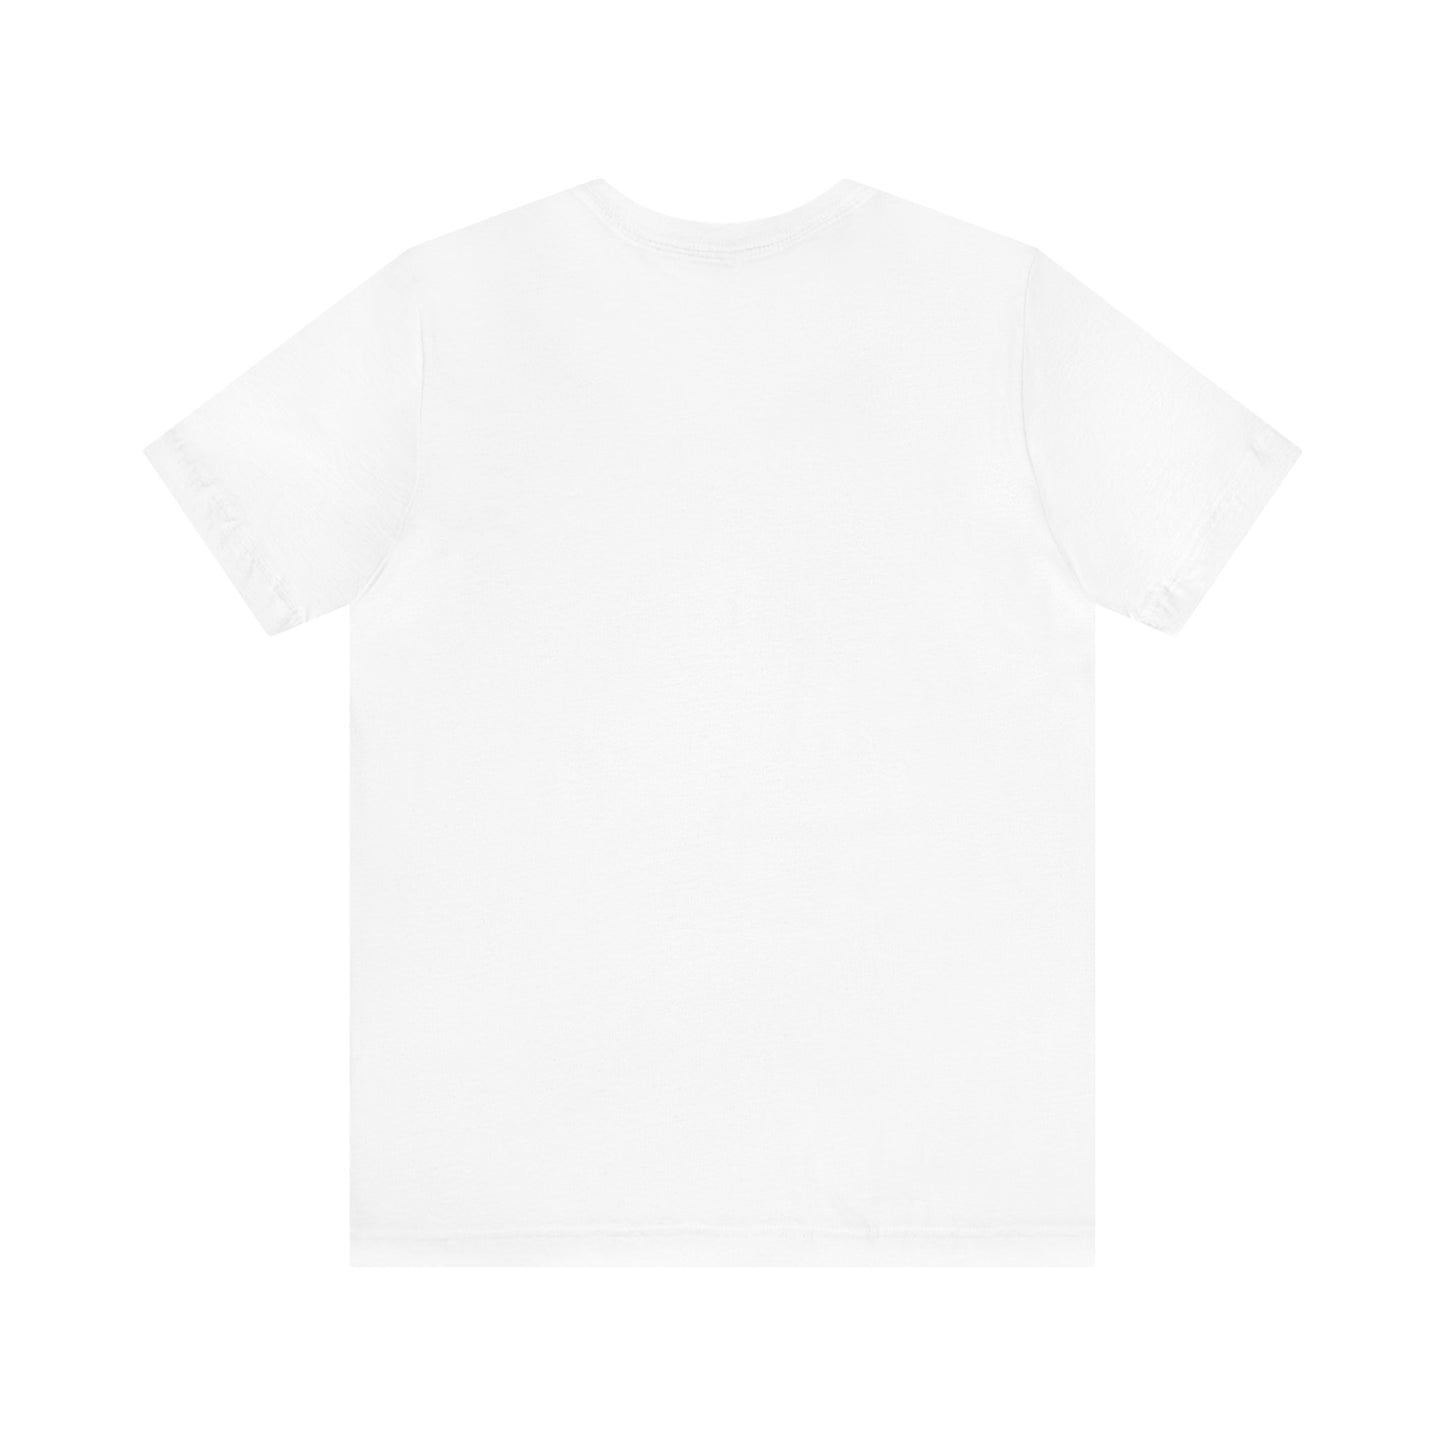 Yuna by Tin - Epic Seven T-Shirt (Unisex)